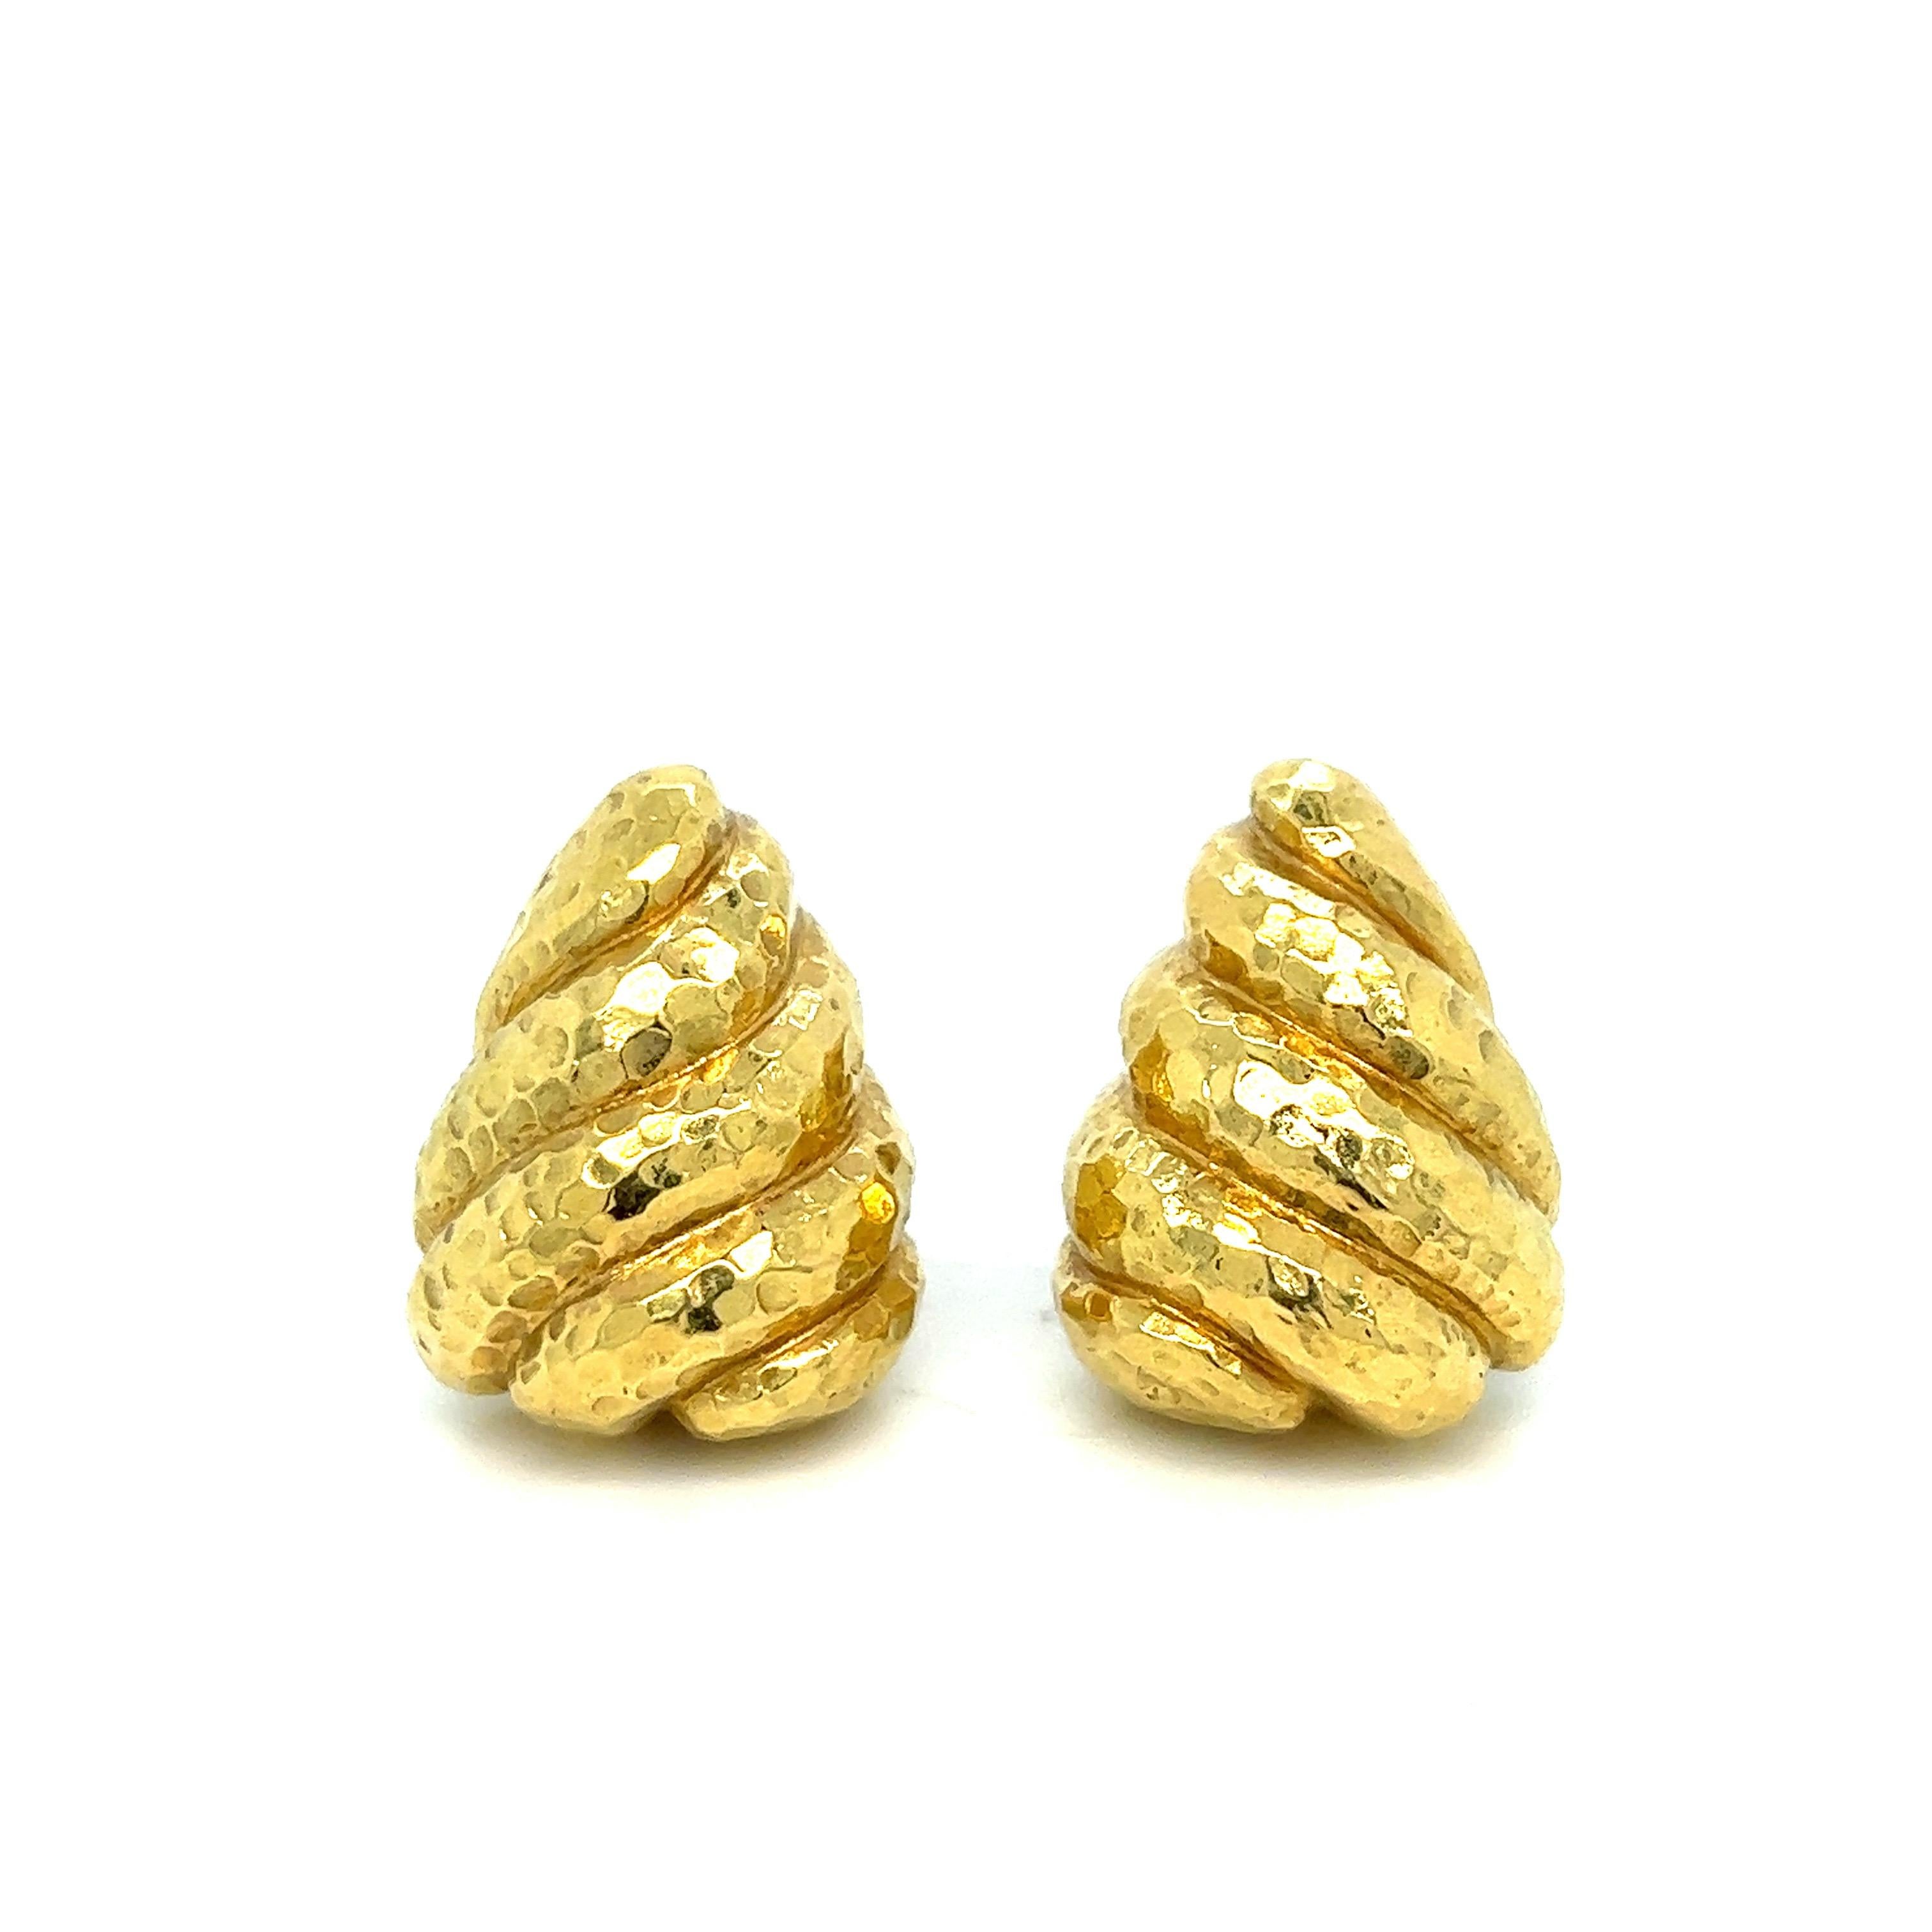 David Webb hammered gold shell ear clips 

Hammered 18 karat yellow gold, shell motif; marked Webb, 18k

Size: width 1.9 cm, length 2.5 cm
Total weight: 24.7 grams